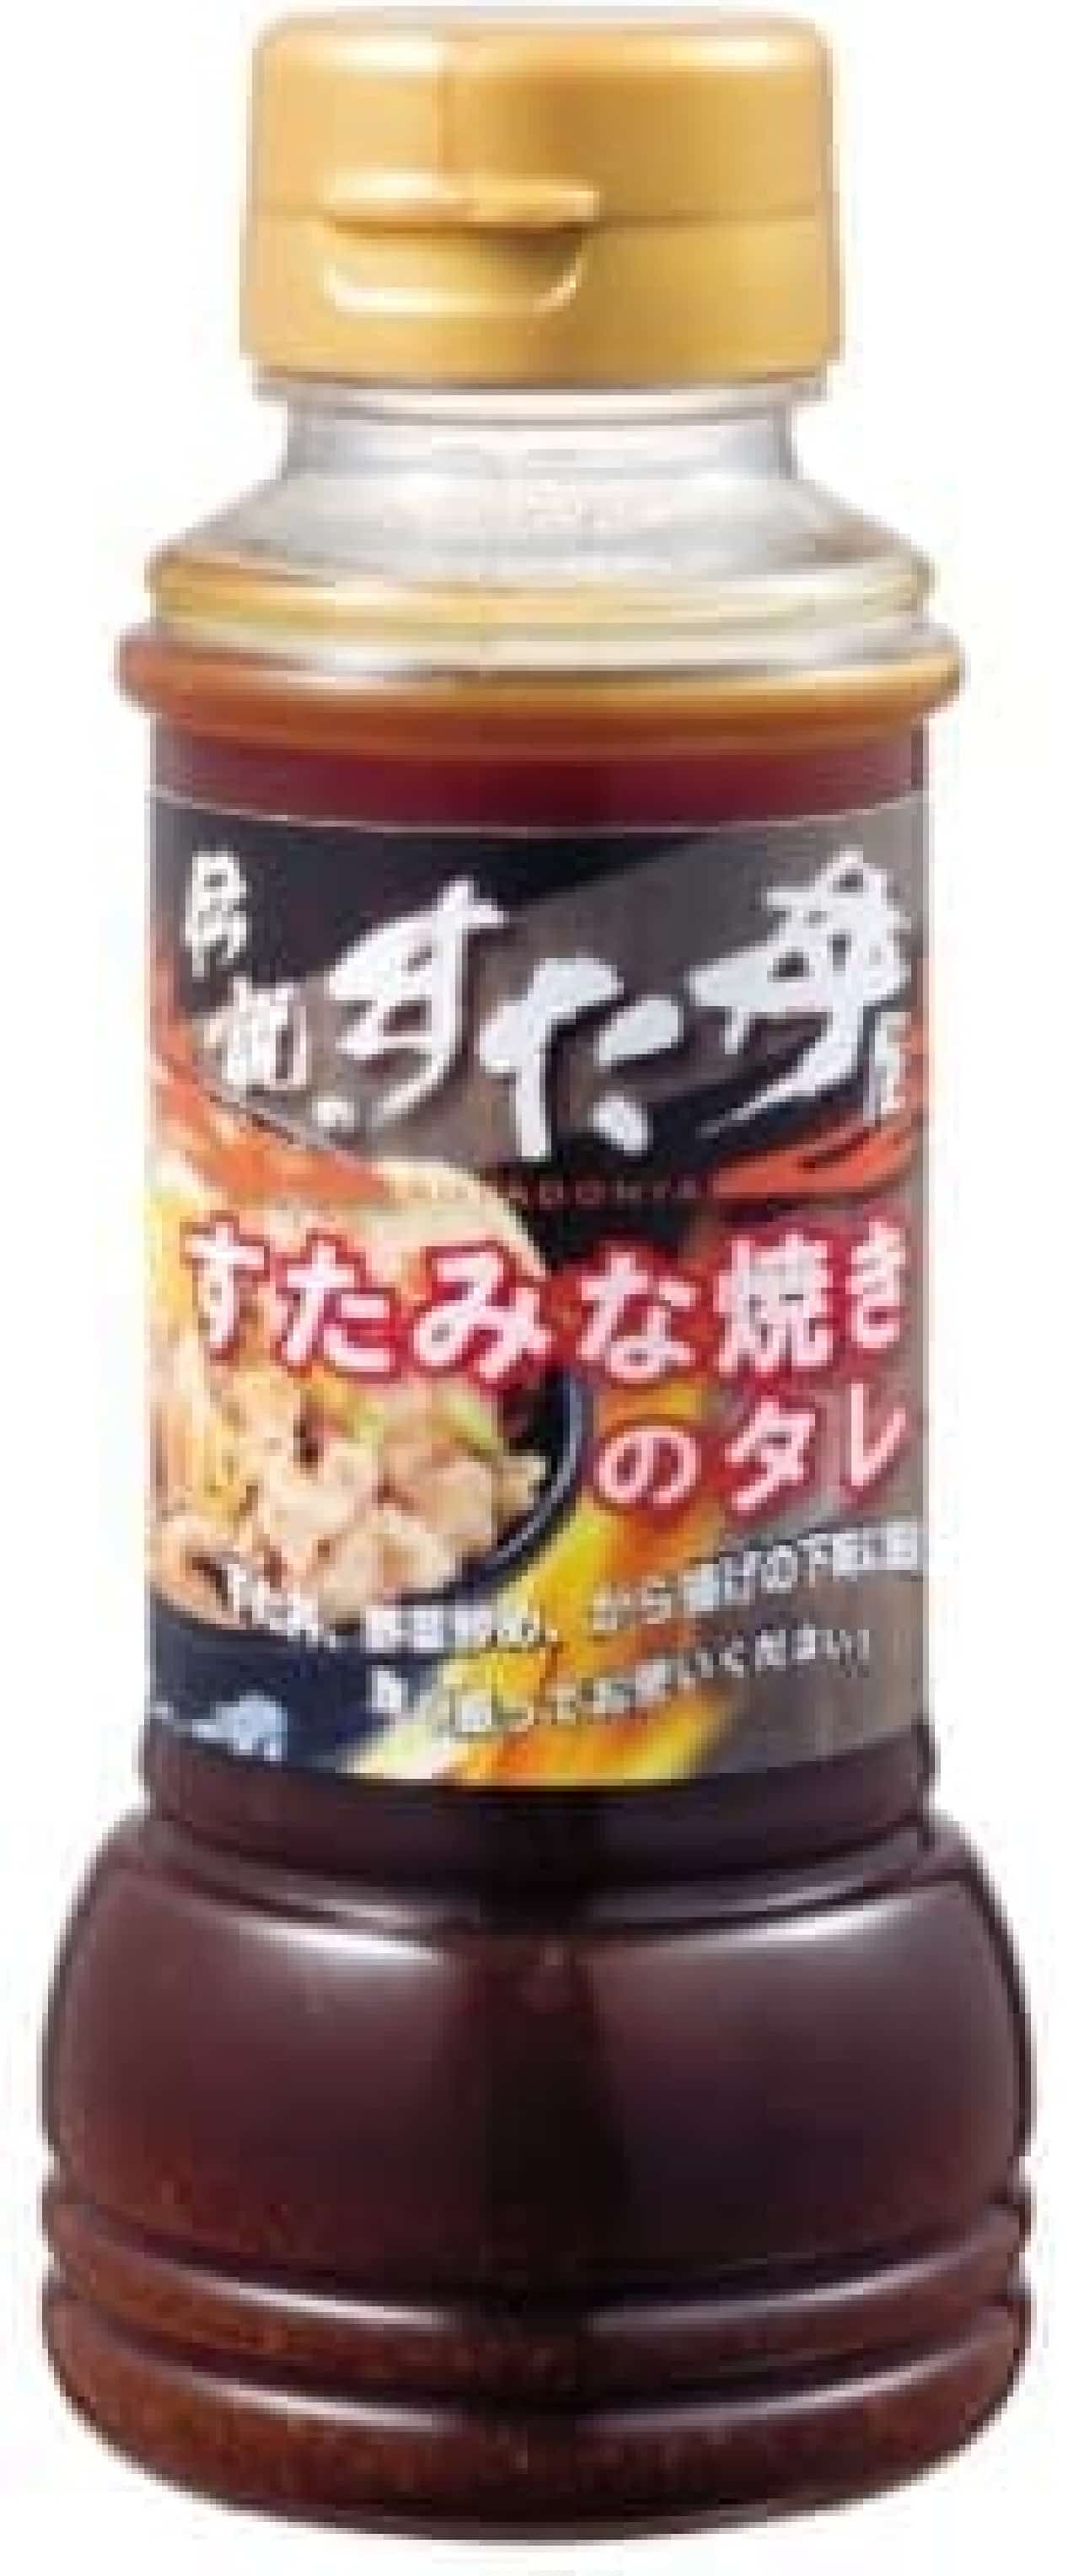 Finally, you can buy "Sutamina-yaki sauce" at a convenience store!